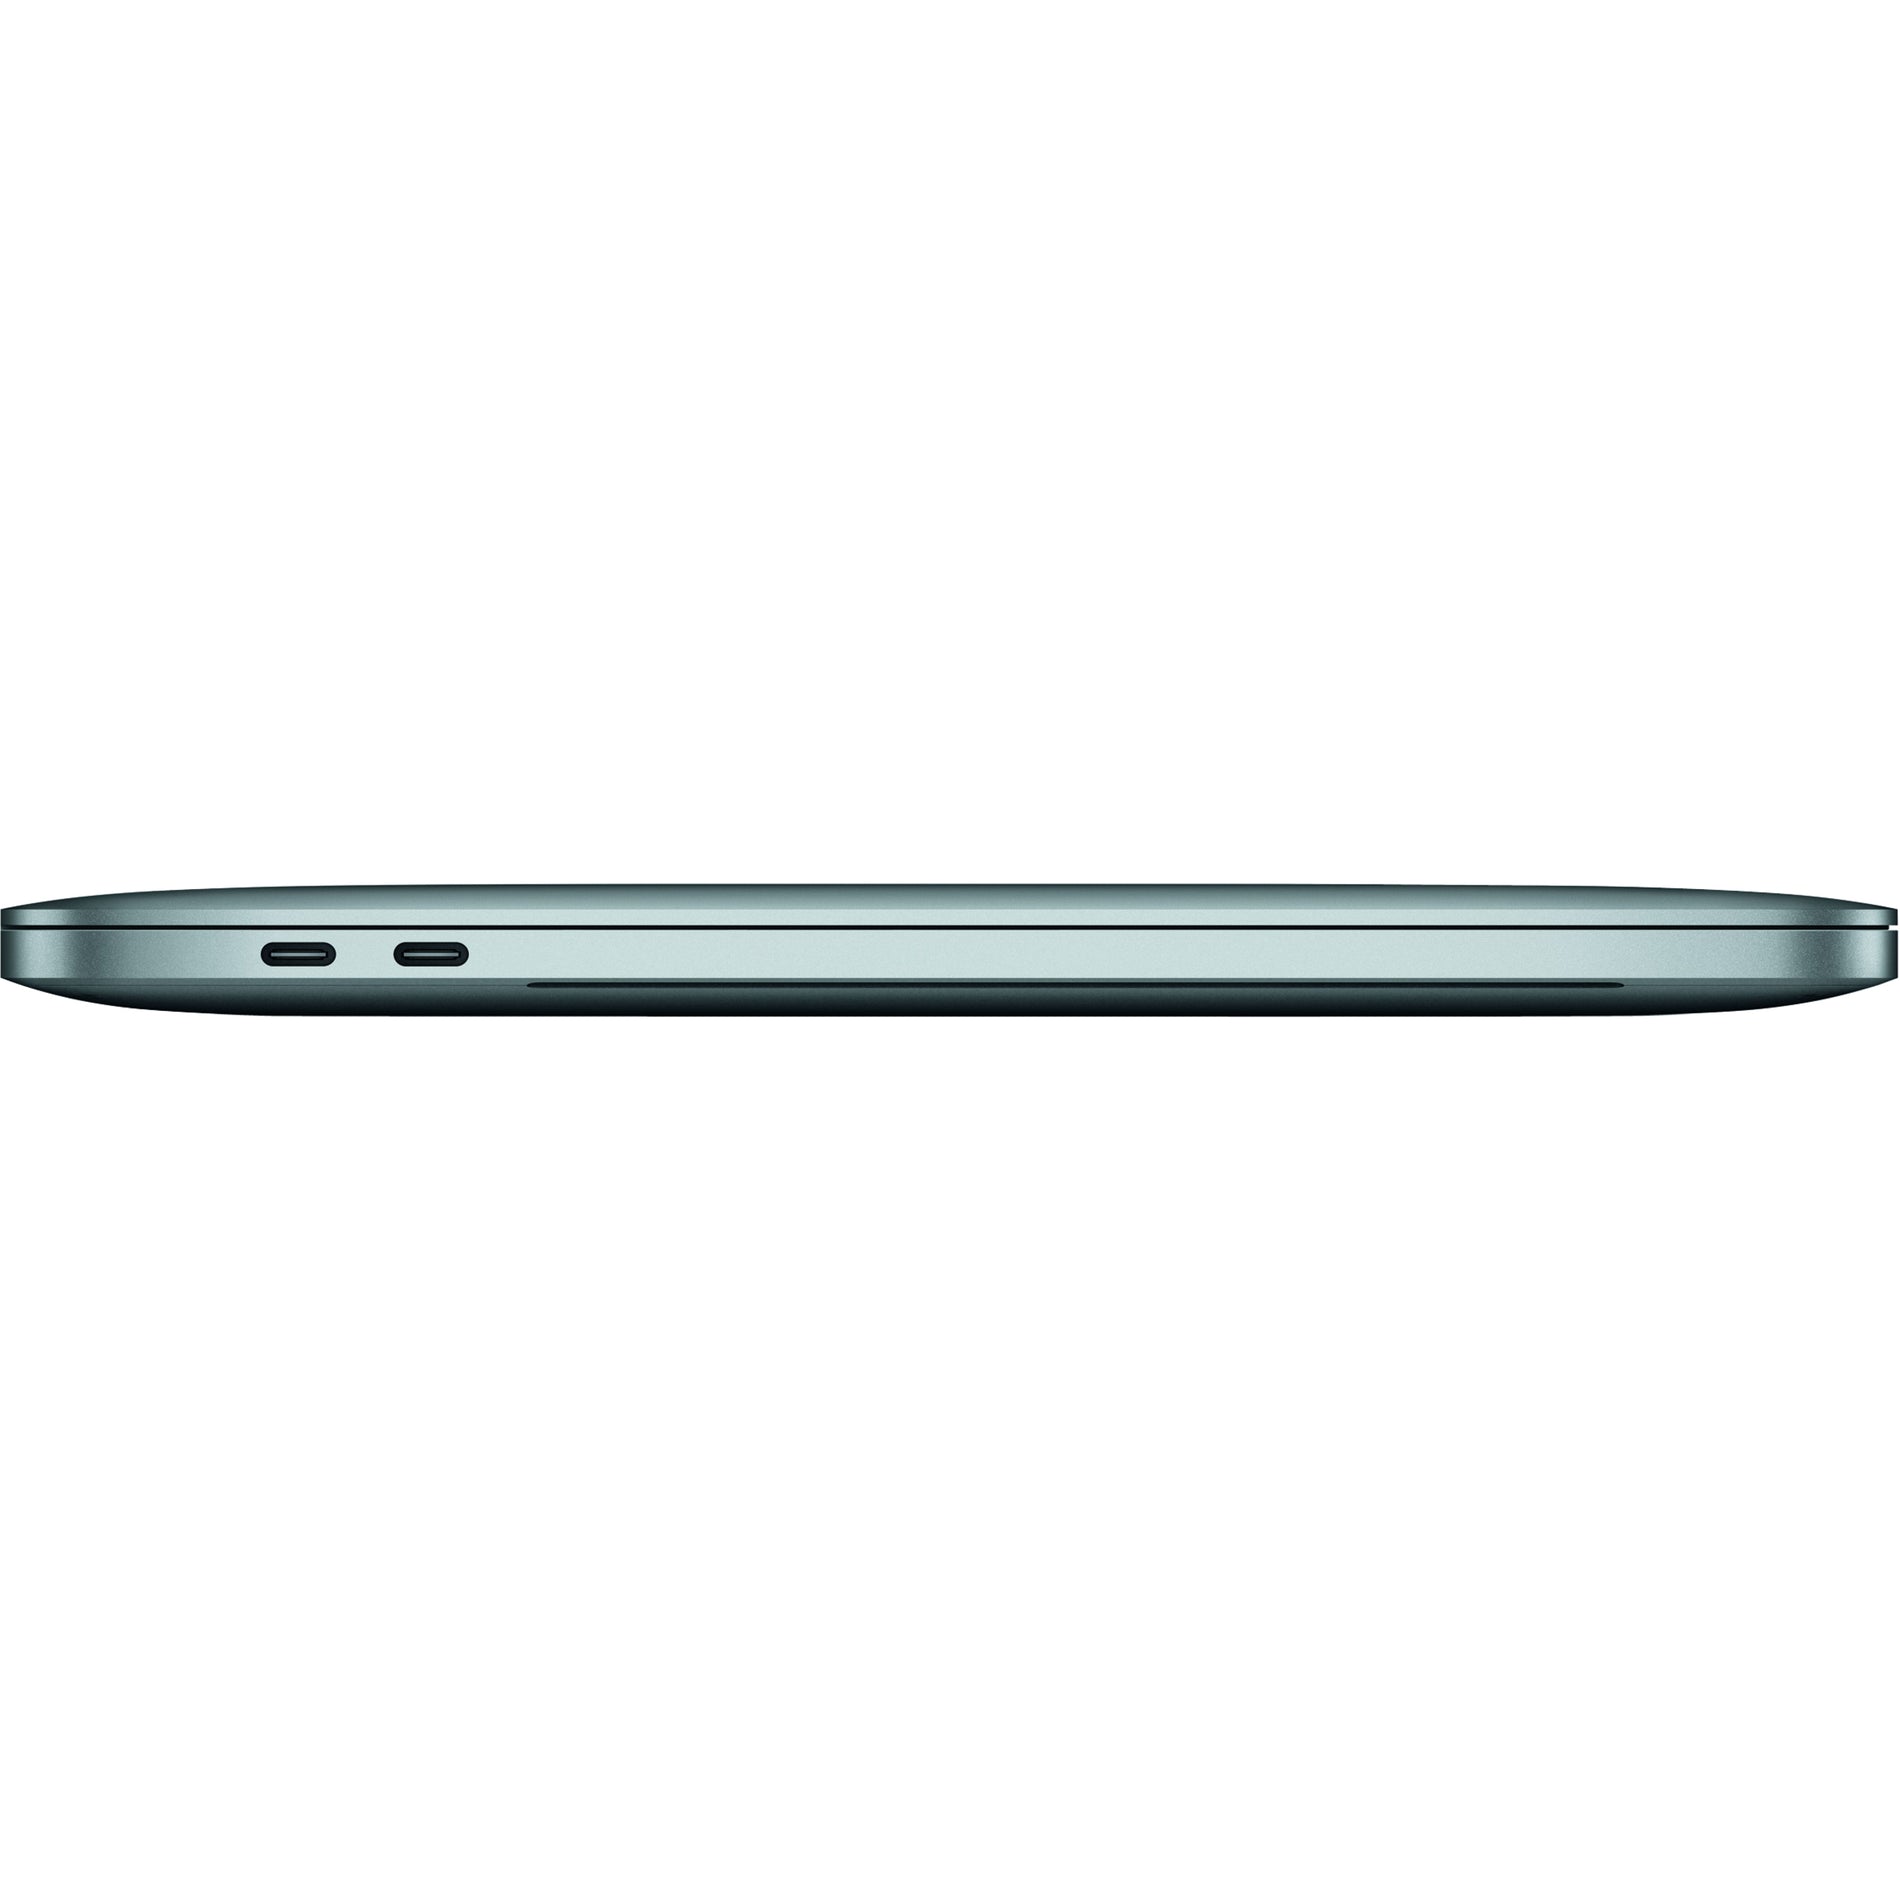 Apple MV912LL/A MacBook Pro 15.4" Notebook, Core i9, 16GB RAM, 512GB SSD, Radeon Pro 560X